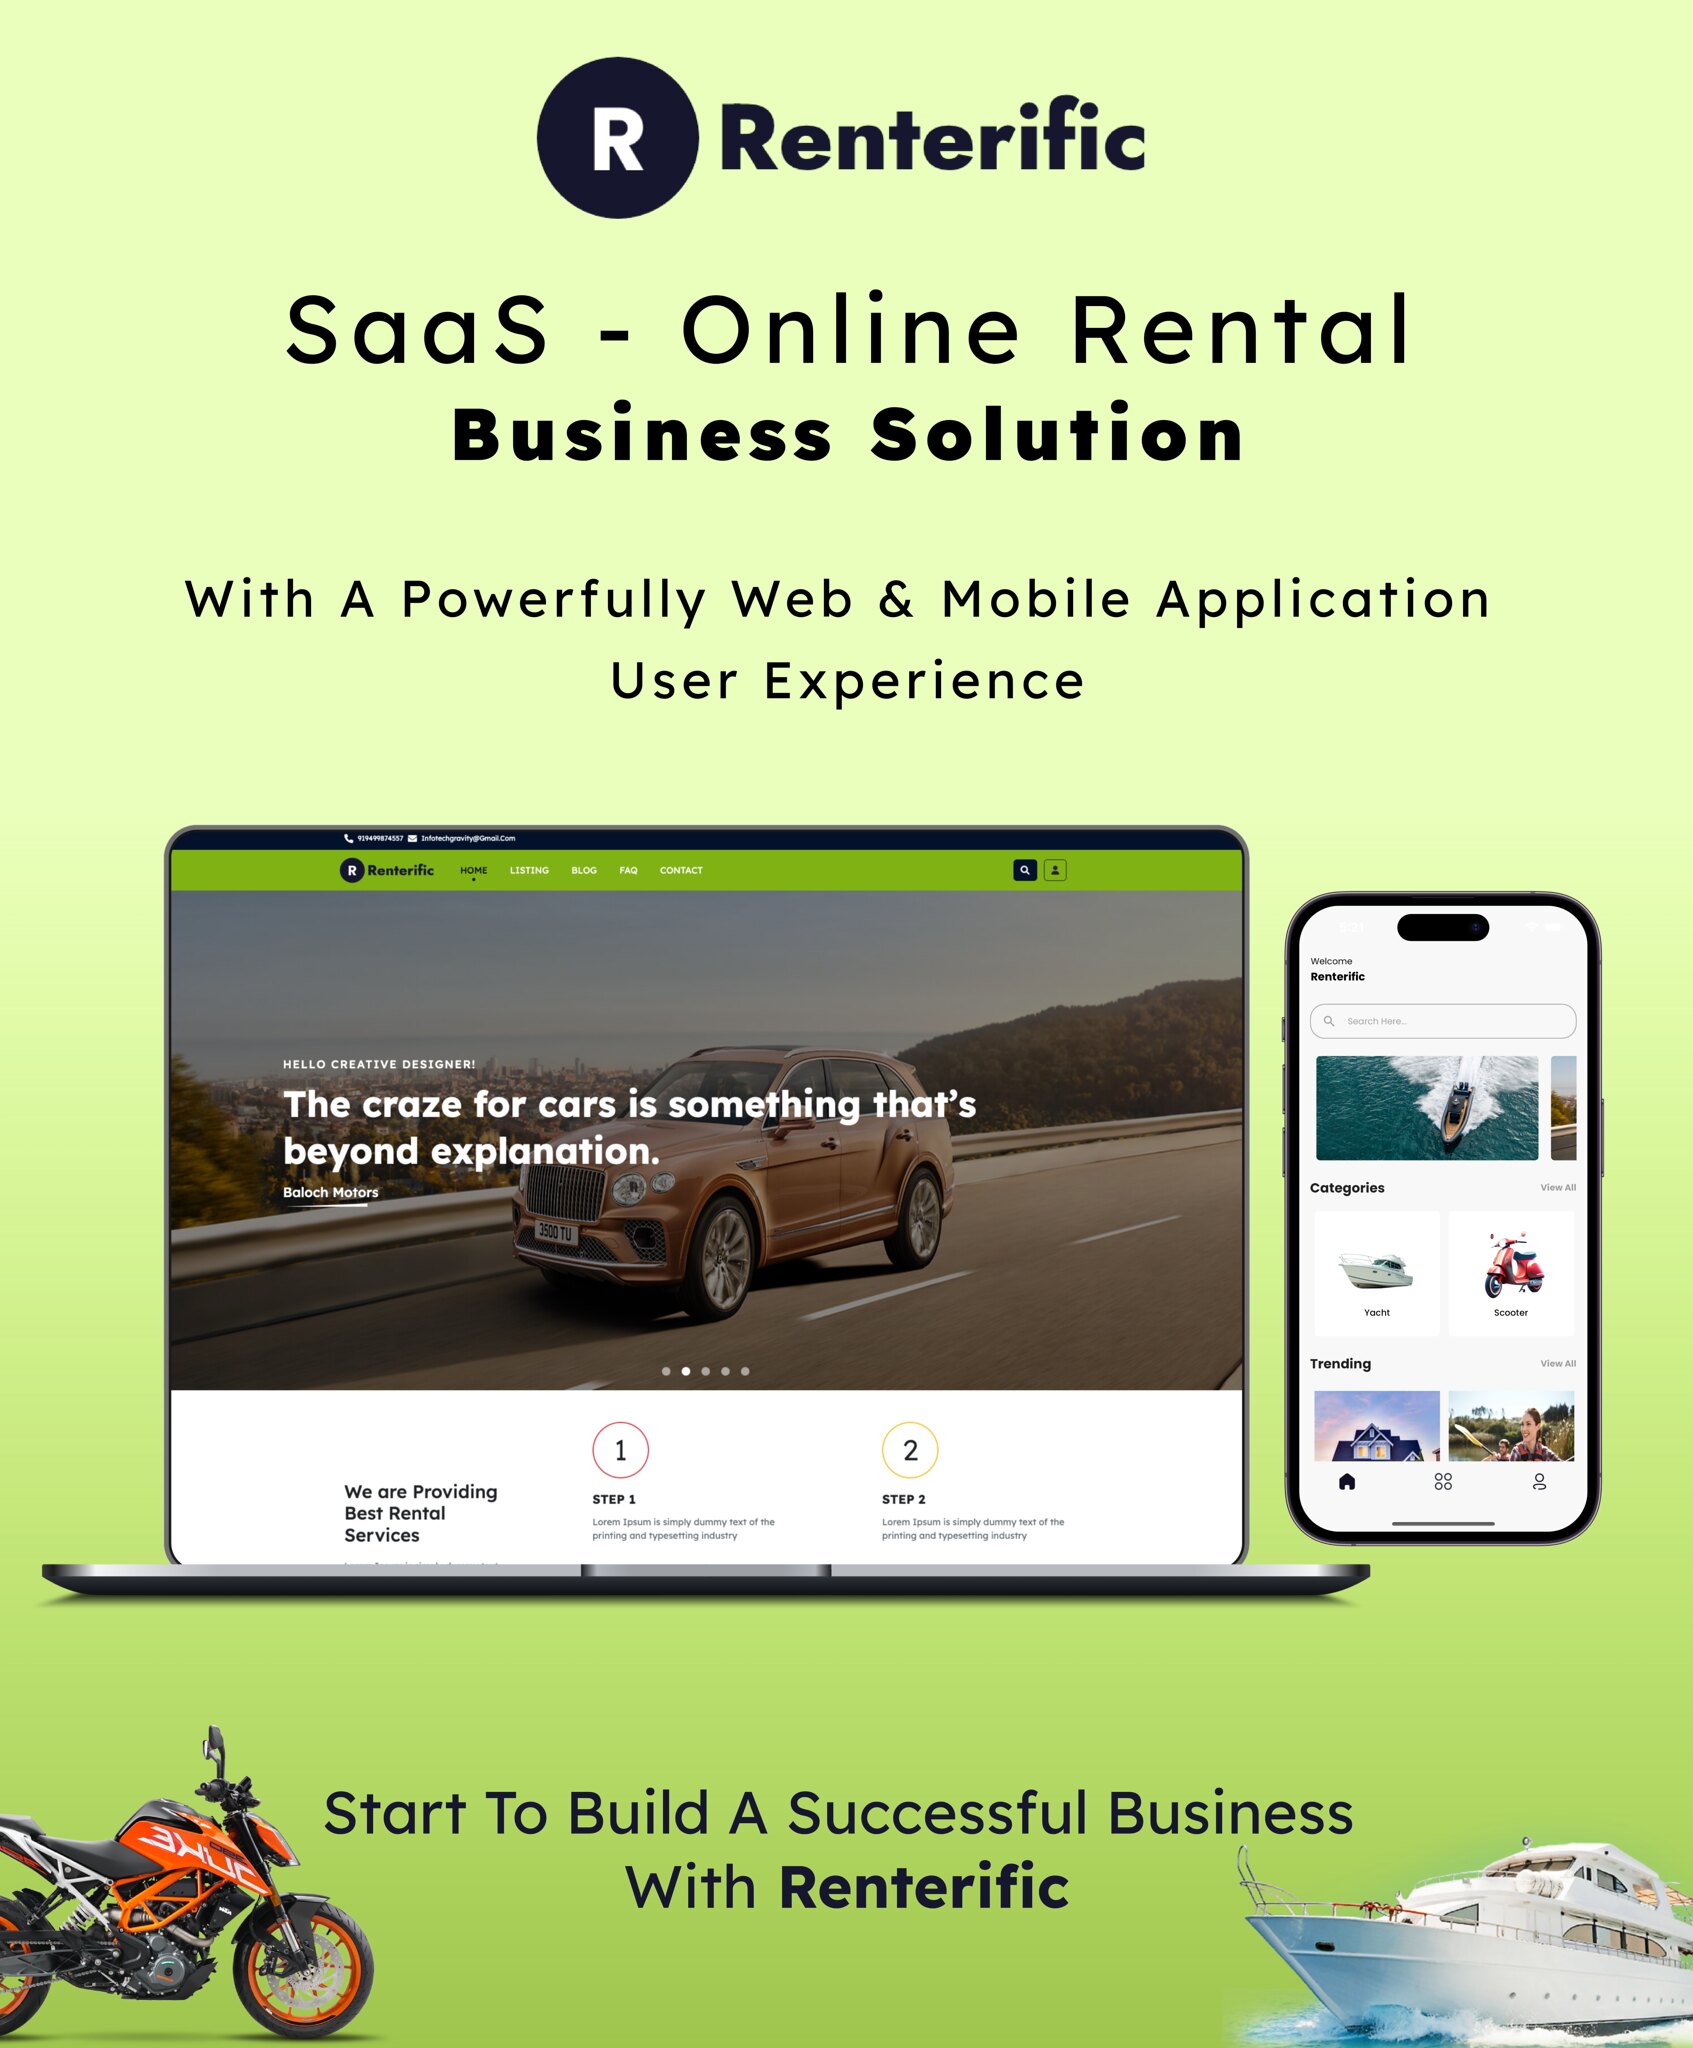 Renterific SaaS - Online Rental System Flutter App With Laravel Website And Admin Panel